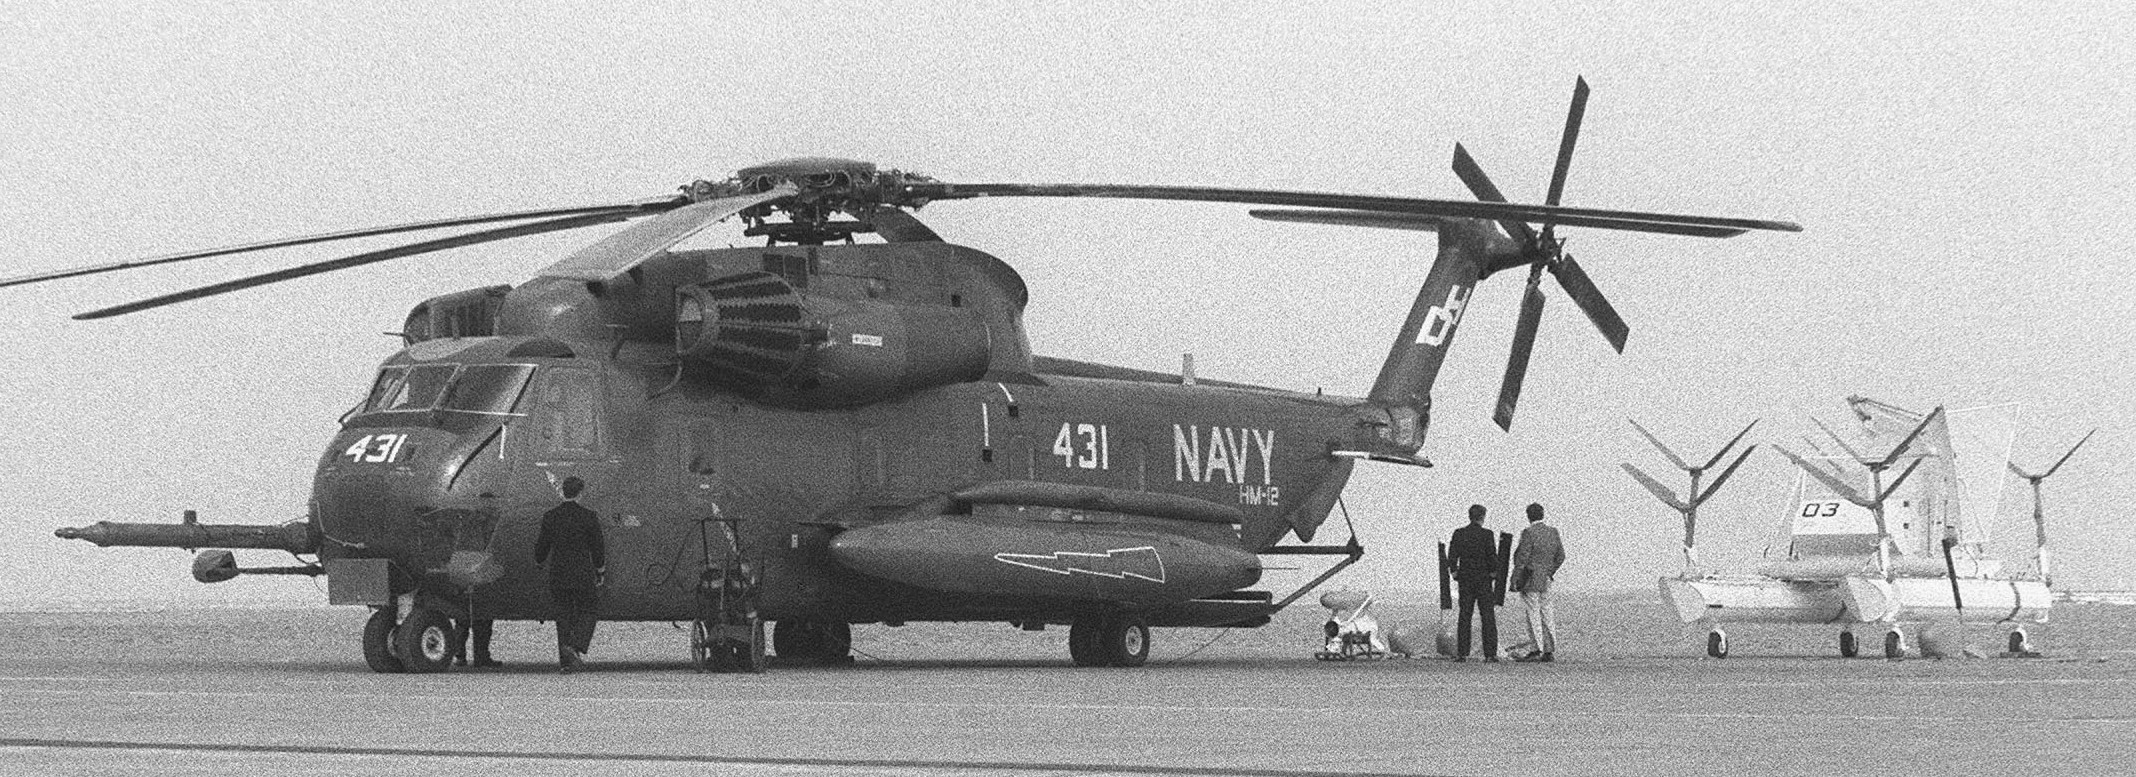 hm-12 sea dragons helicopter mine countermeasures squadron navy rh-53d sea stallion 20